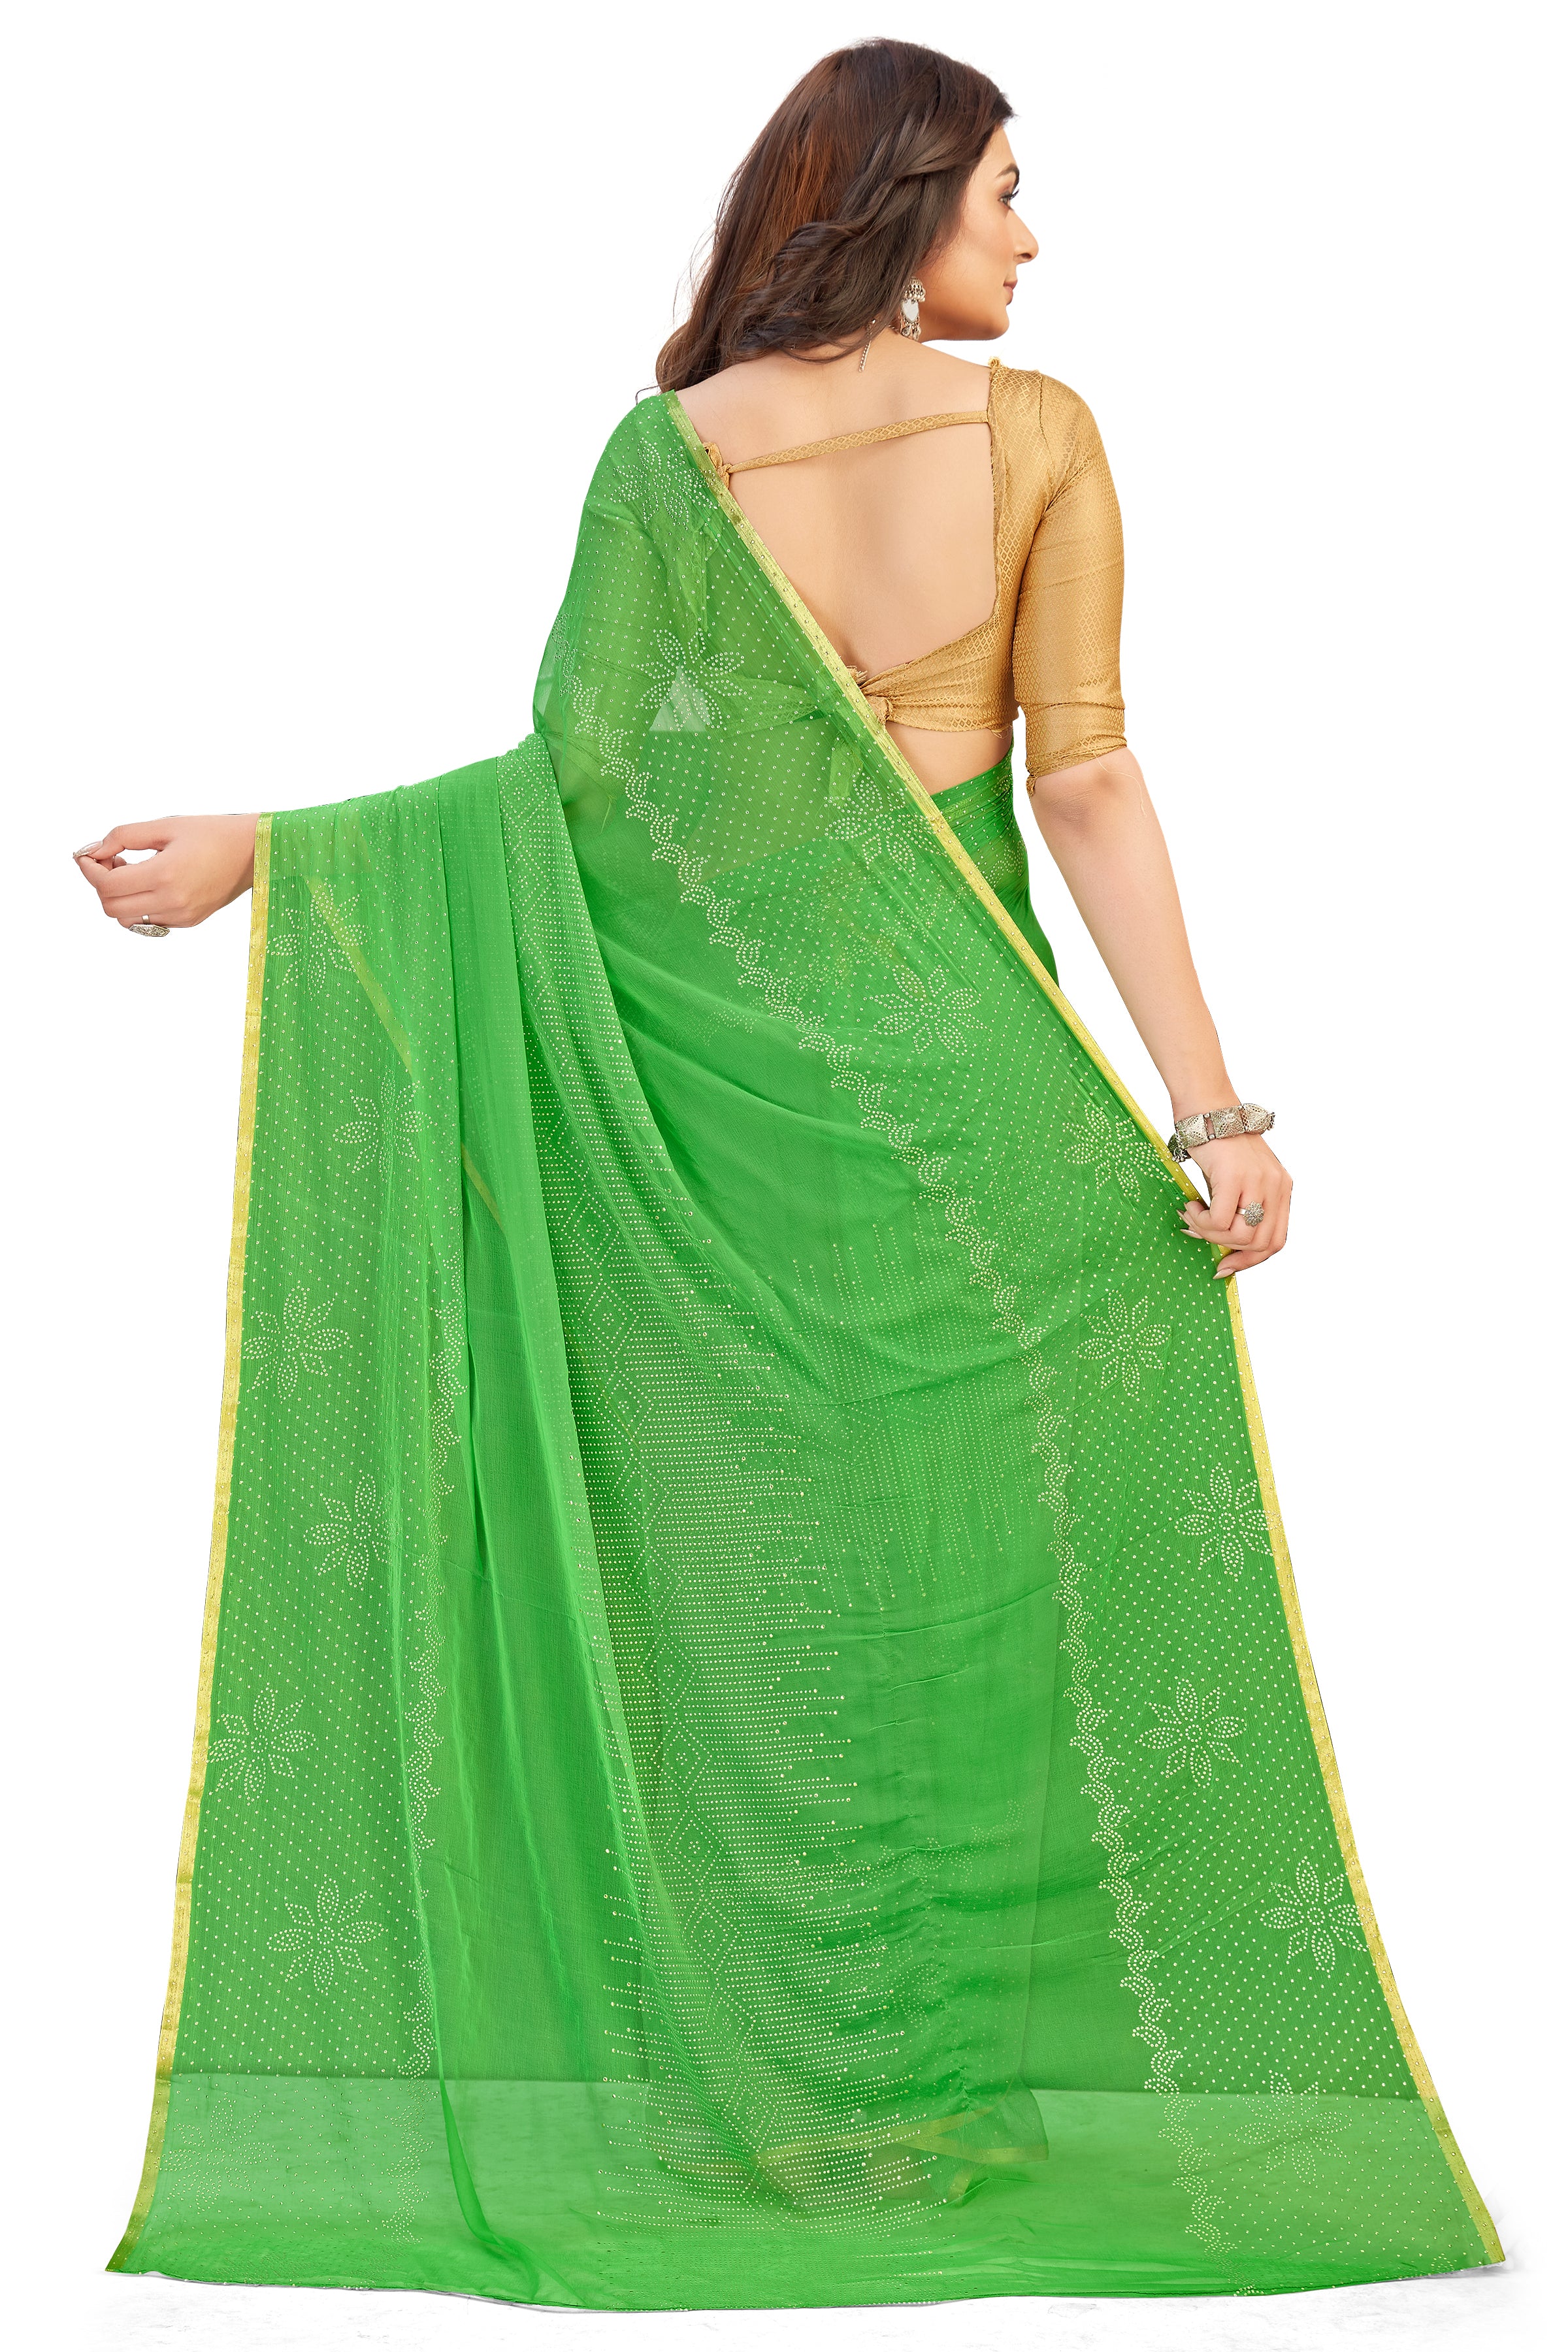 Women's Bandhani Daily Wear Chiffon Sari With Blouse Piece (Light Green) - NIMIDHYA